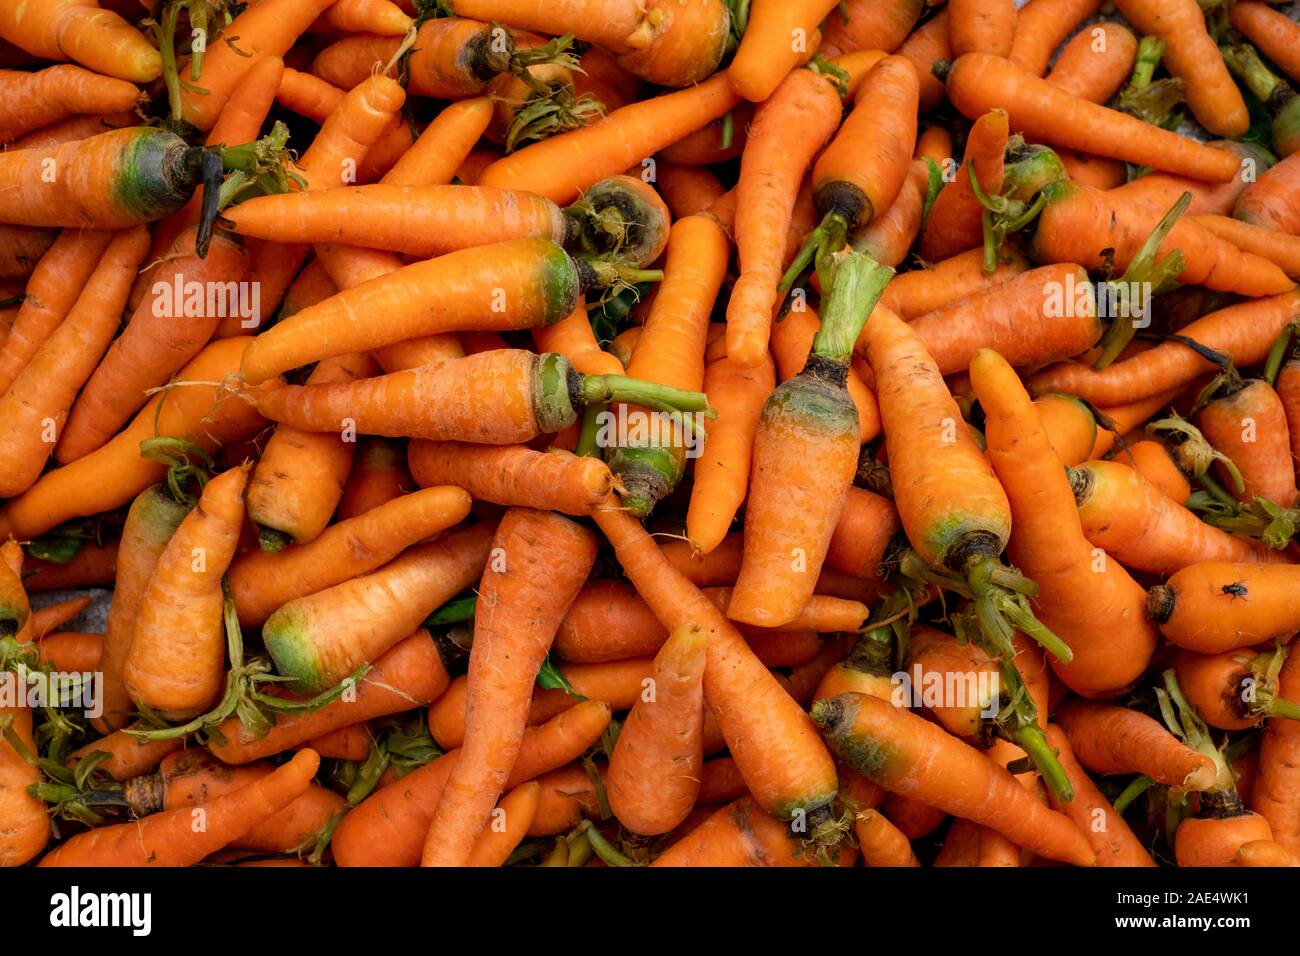 Full frame image of fresh bright orange carrots sold in a market in Mandalay, Myanmar (Burma) Stock Photo